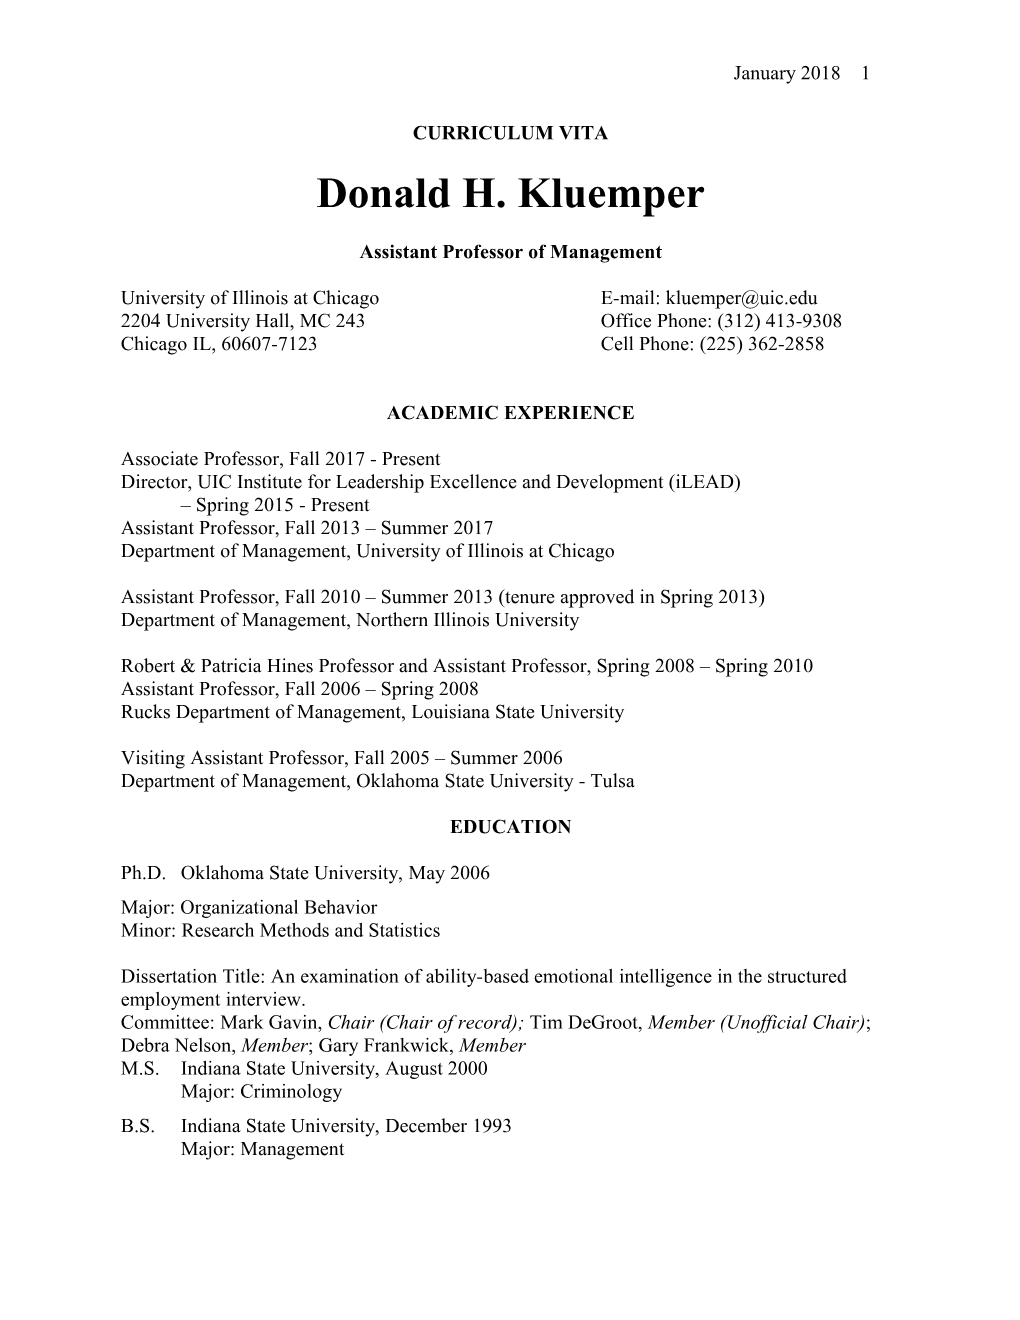 Donald H. Kluemper